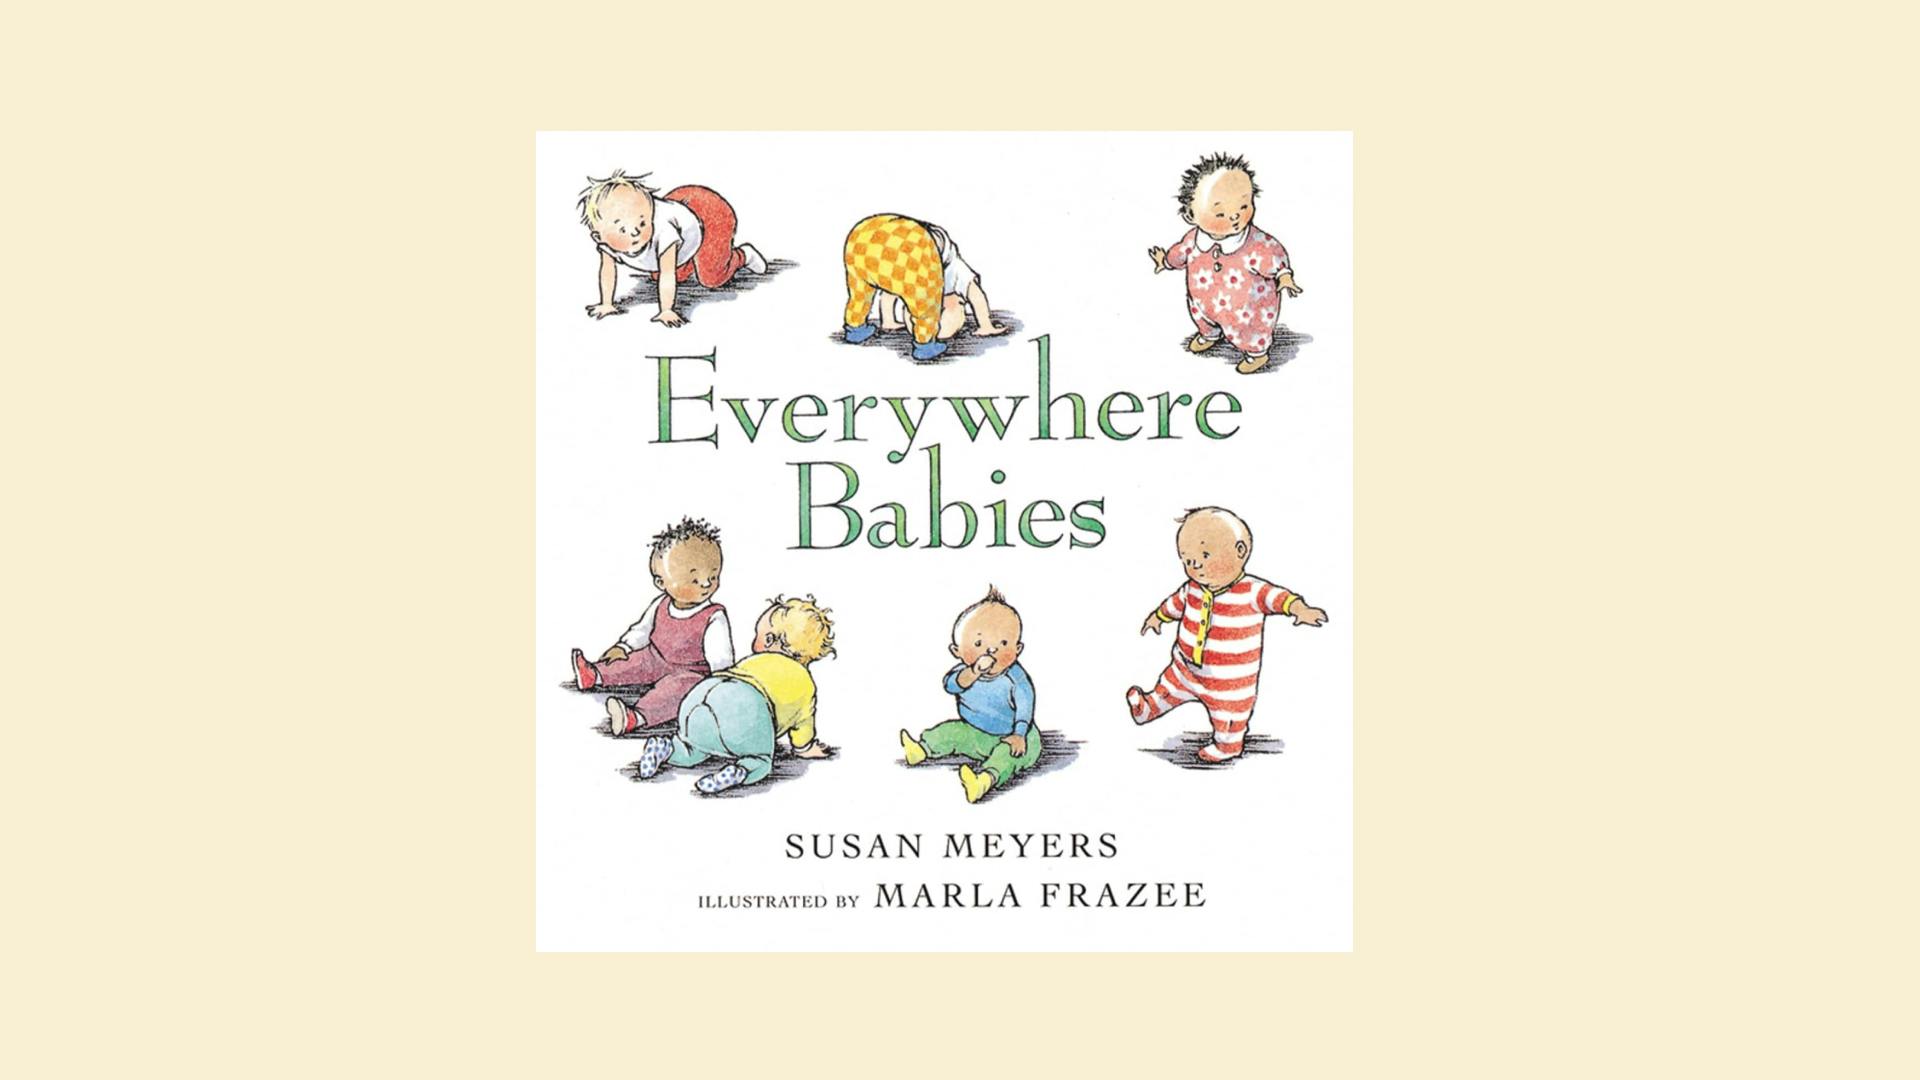 A kids book about curious babies